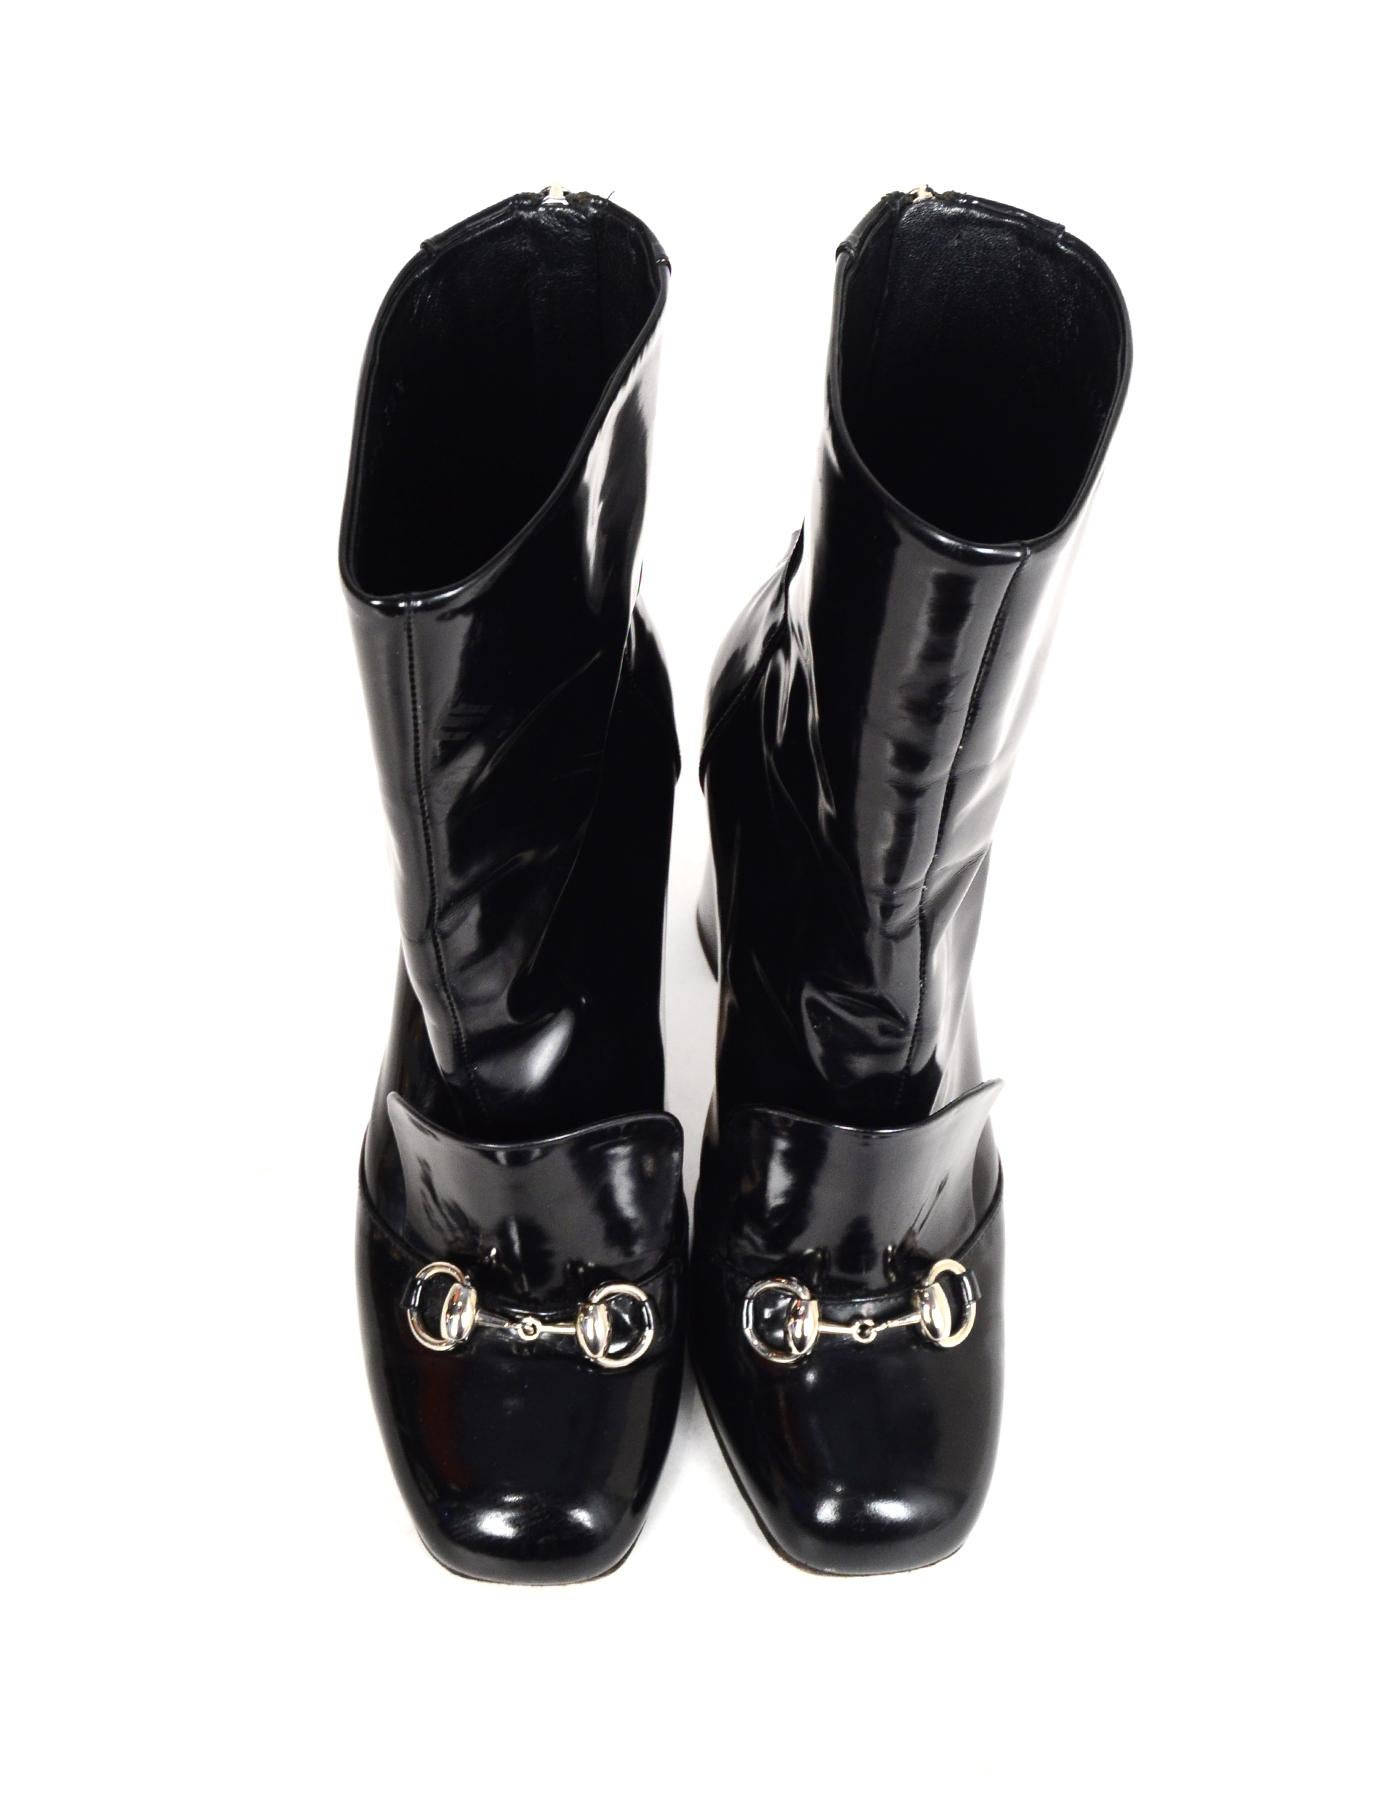 Gucci Black Polished/Glazed Leather Silver Horsebit Regent Ankle Boots Sz 36.5 2